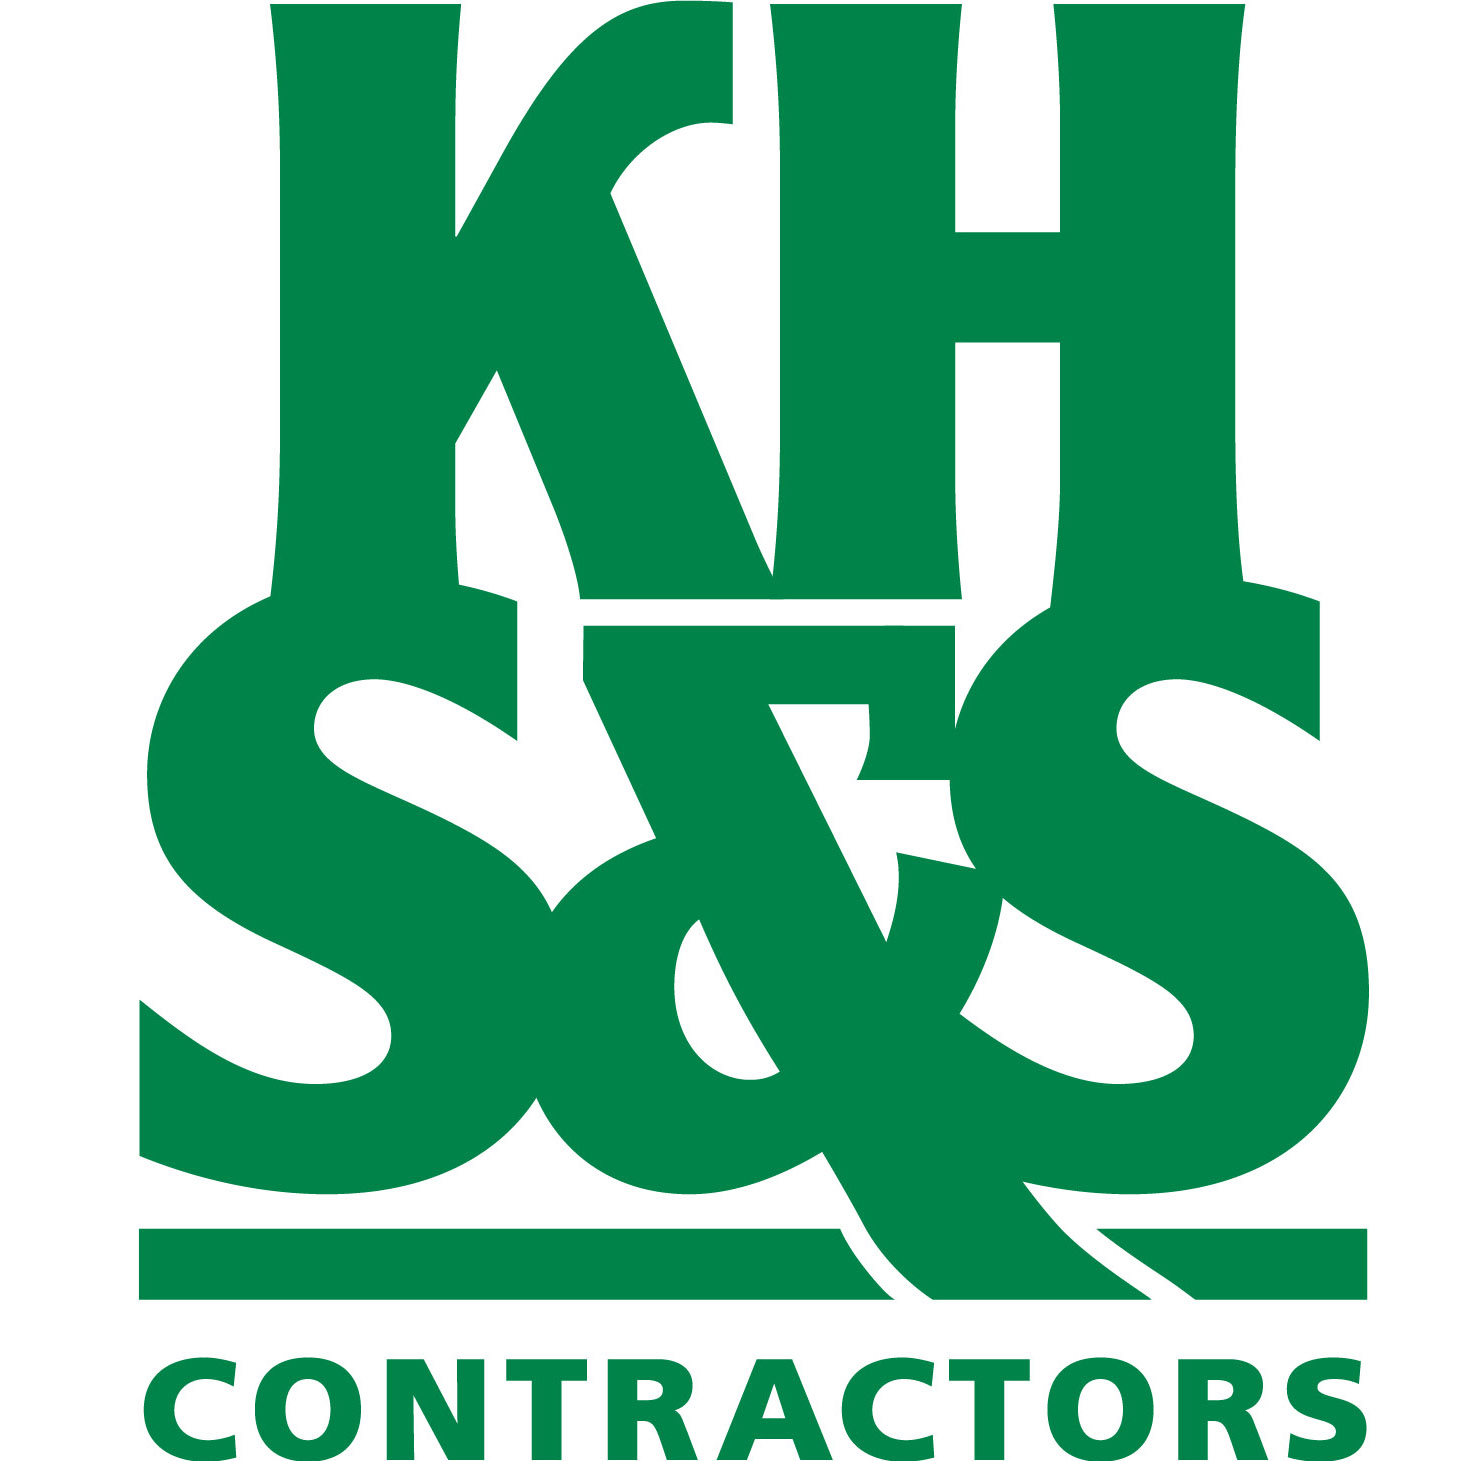 A green logo of the company kh & s contractors.